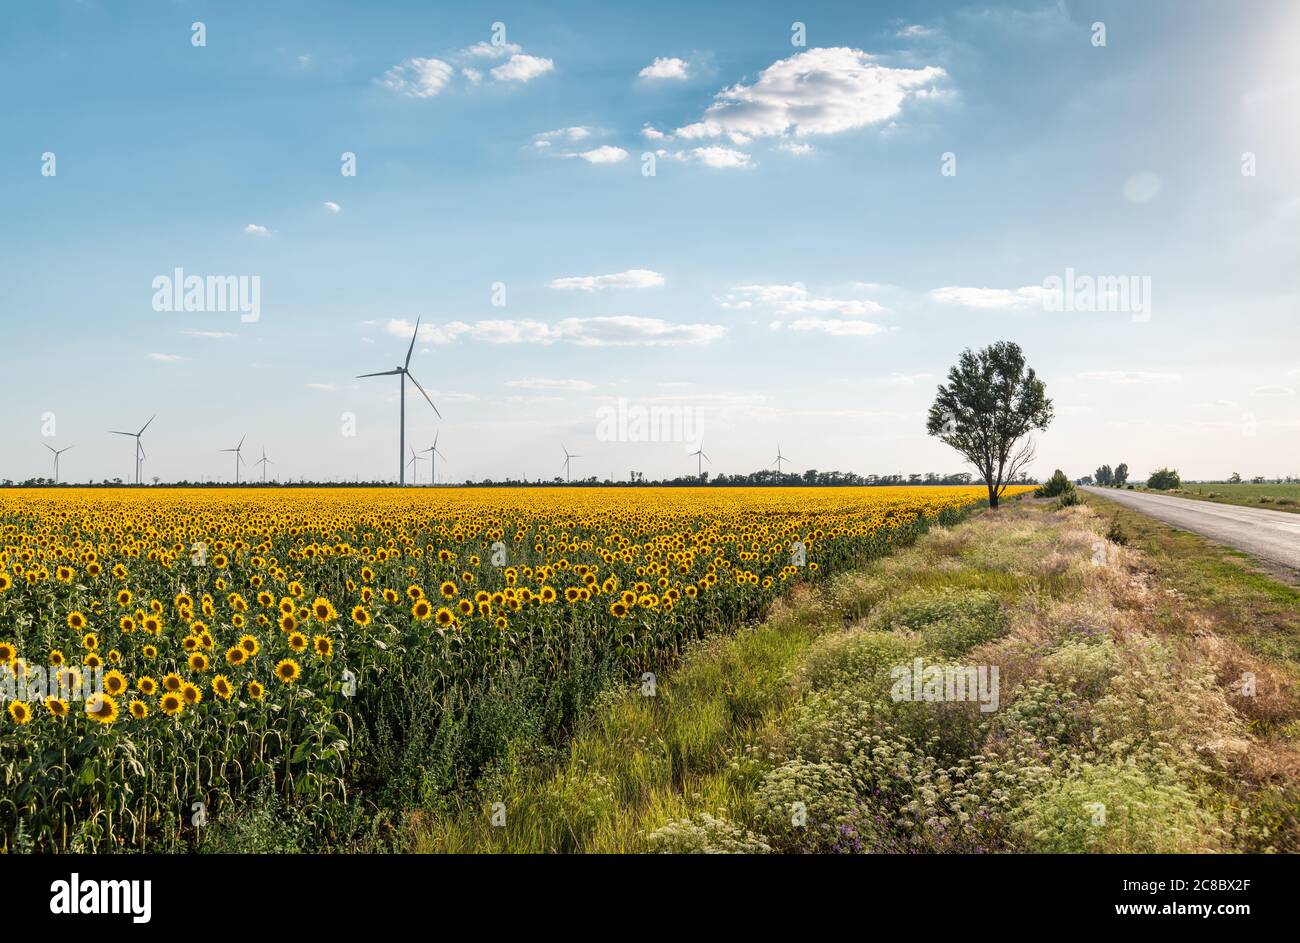 Countryside landscape, wind turbines in sunflower field, alternative energy generation Stock Photo